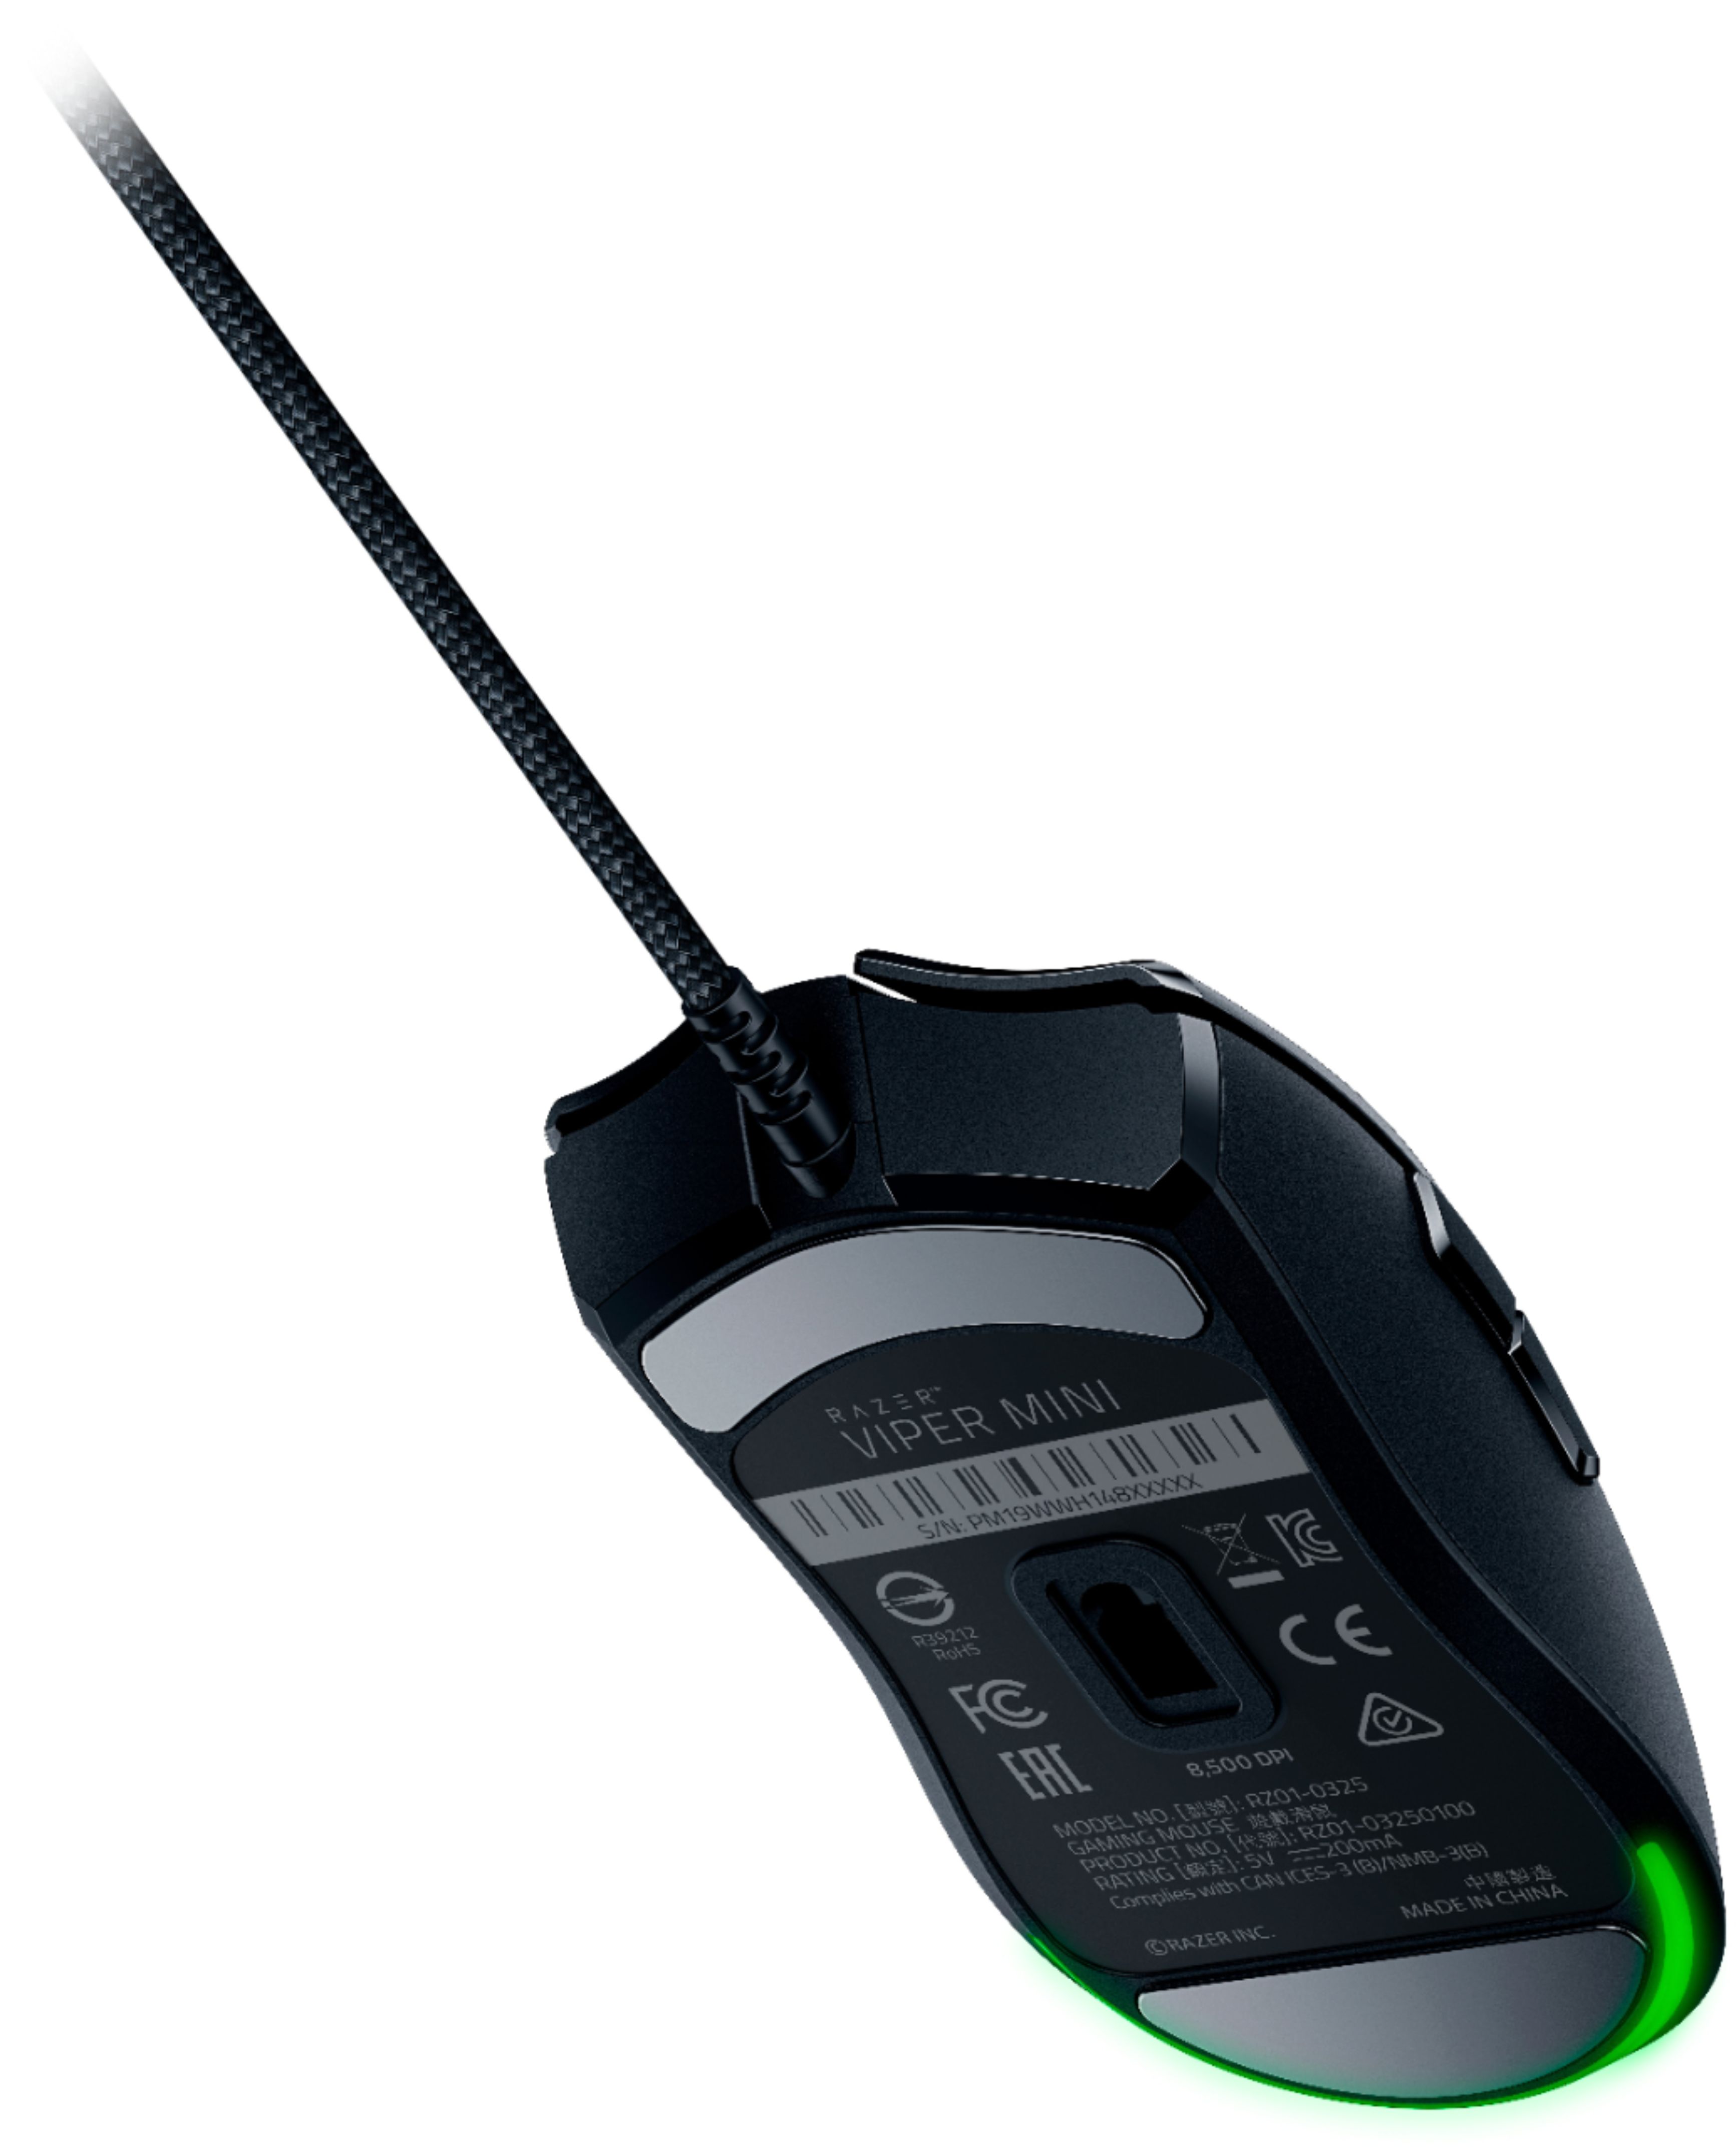 Razer Viper Mini Wired Optical Gaming Mouse RZ01-03250100-R3U1 Black - GB